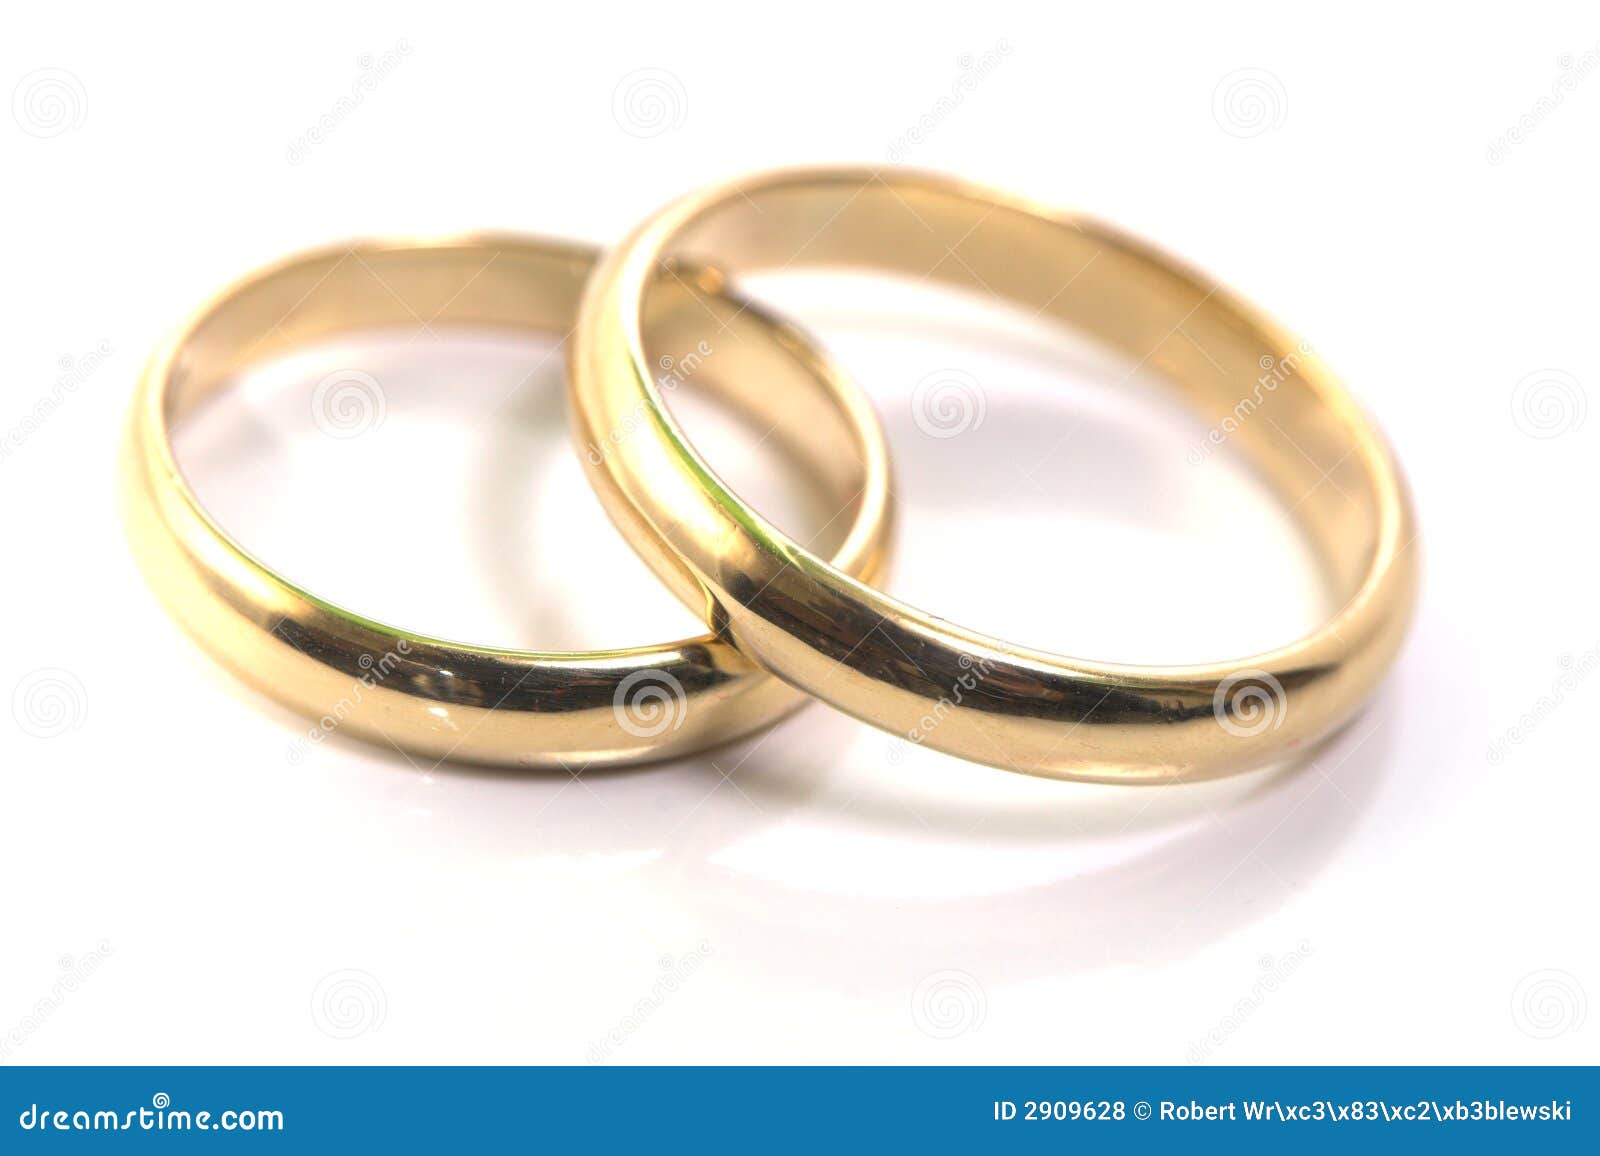 gold wedding rings  on